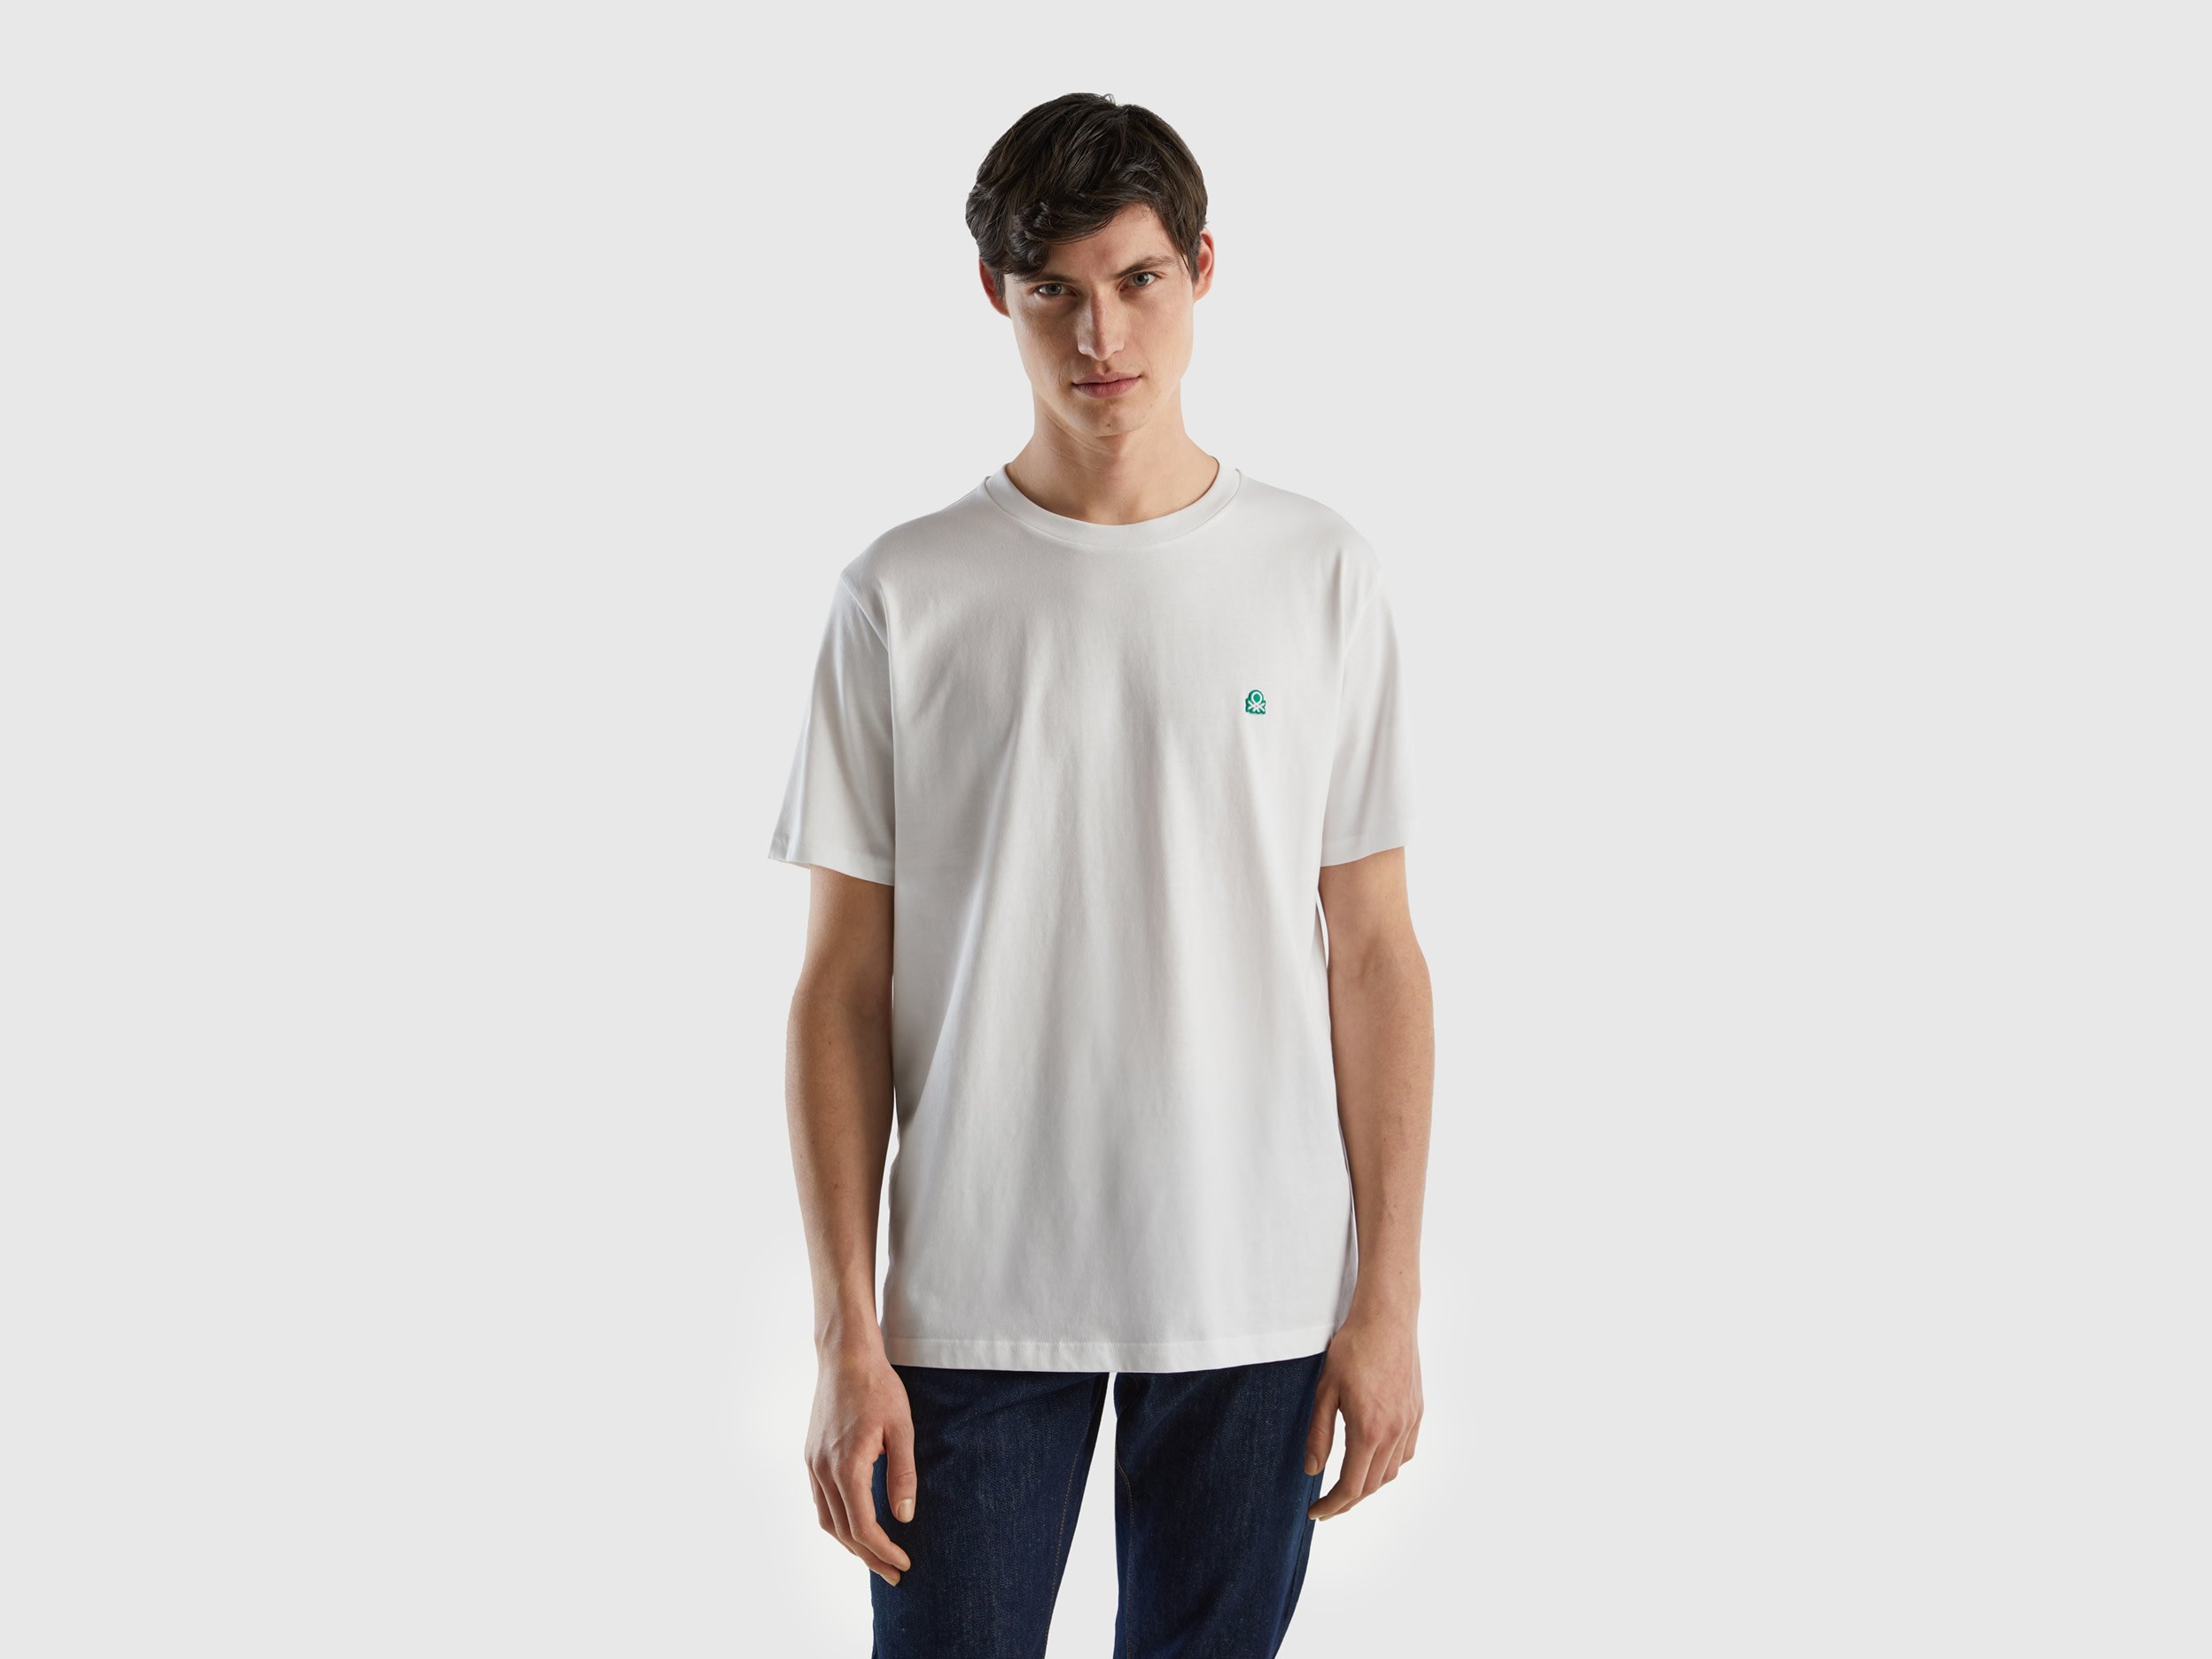 Image of Benetton, 100% Organic Cotton Basic T-shirt, size S, White, Men